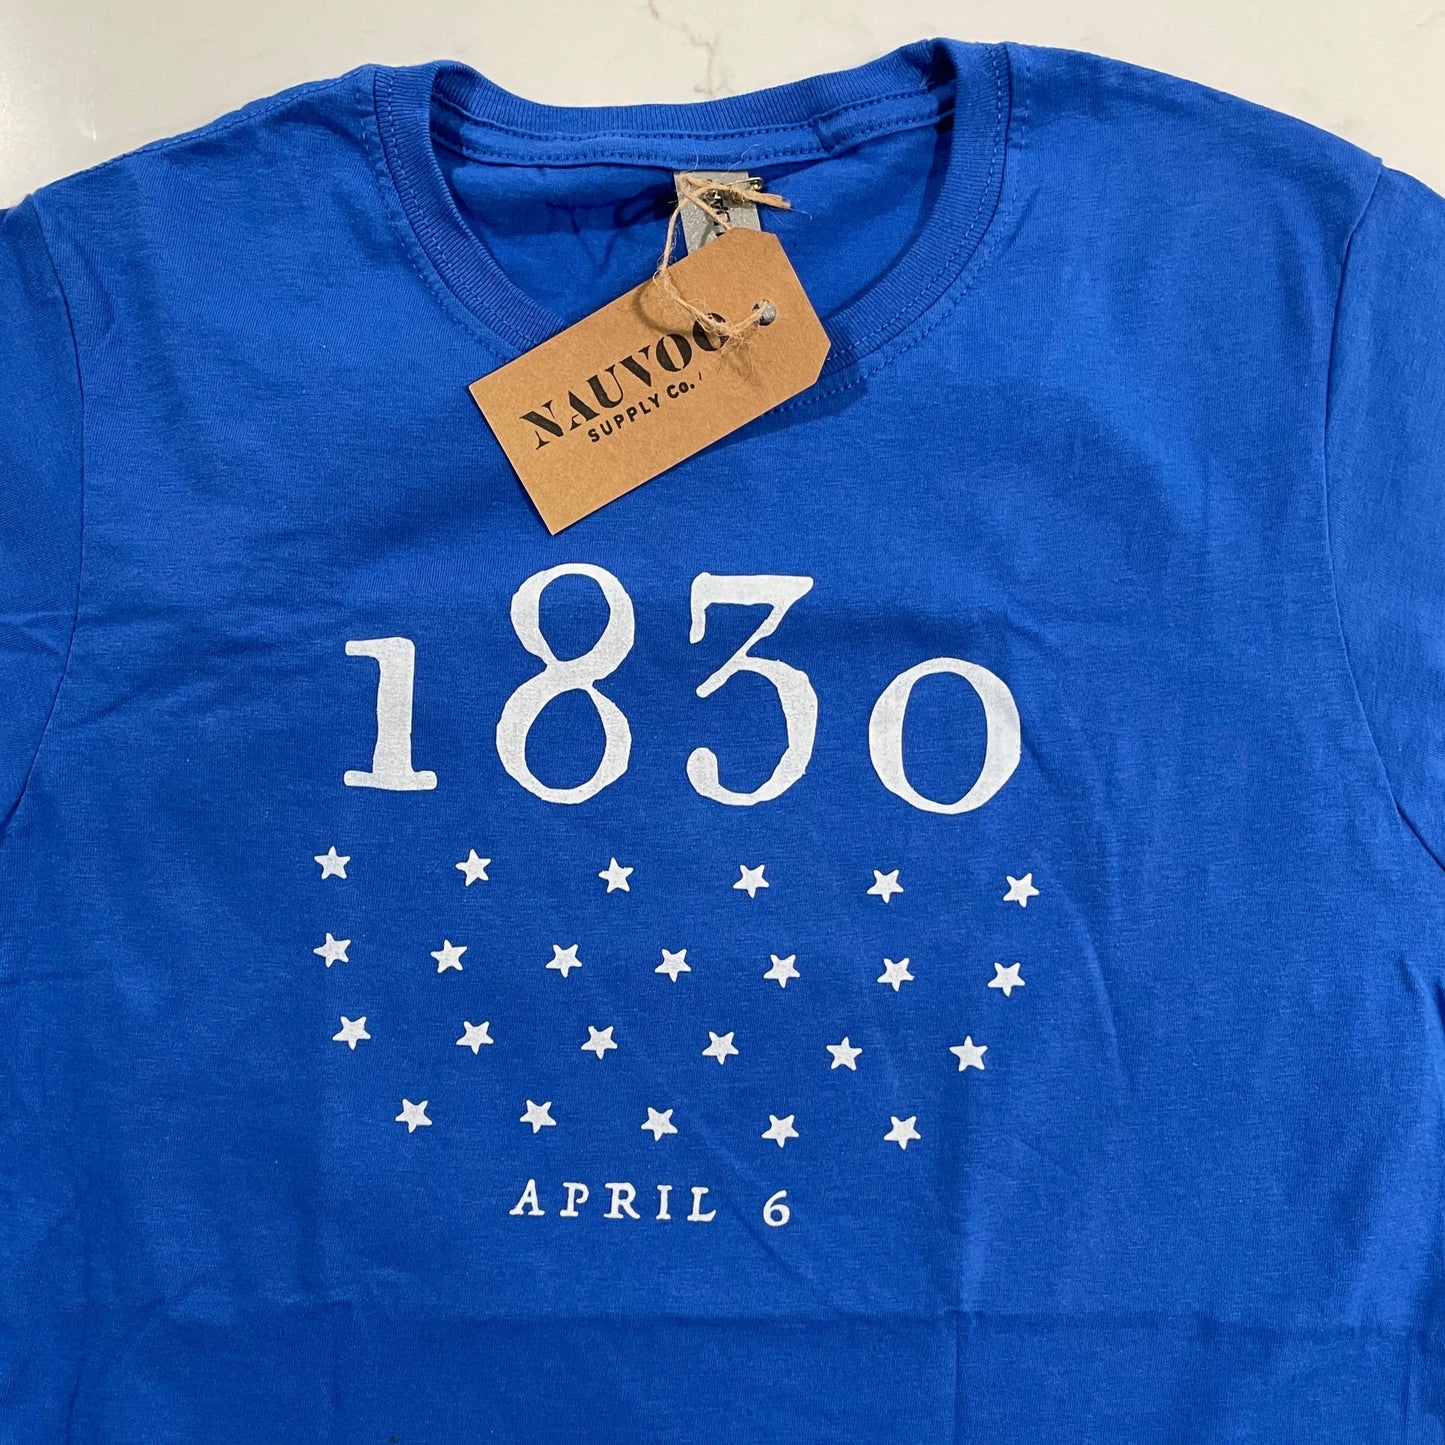 Mens April 6, 1830 Church Restoration T-shirt